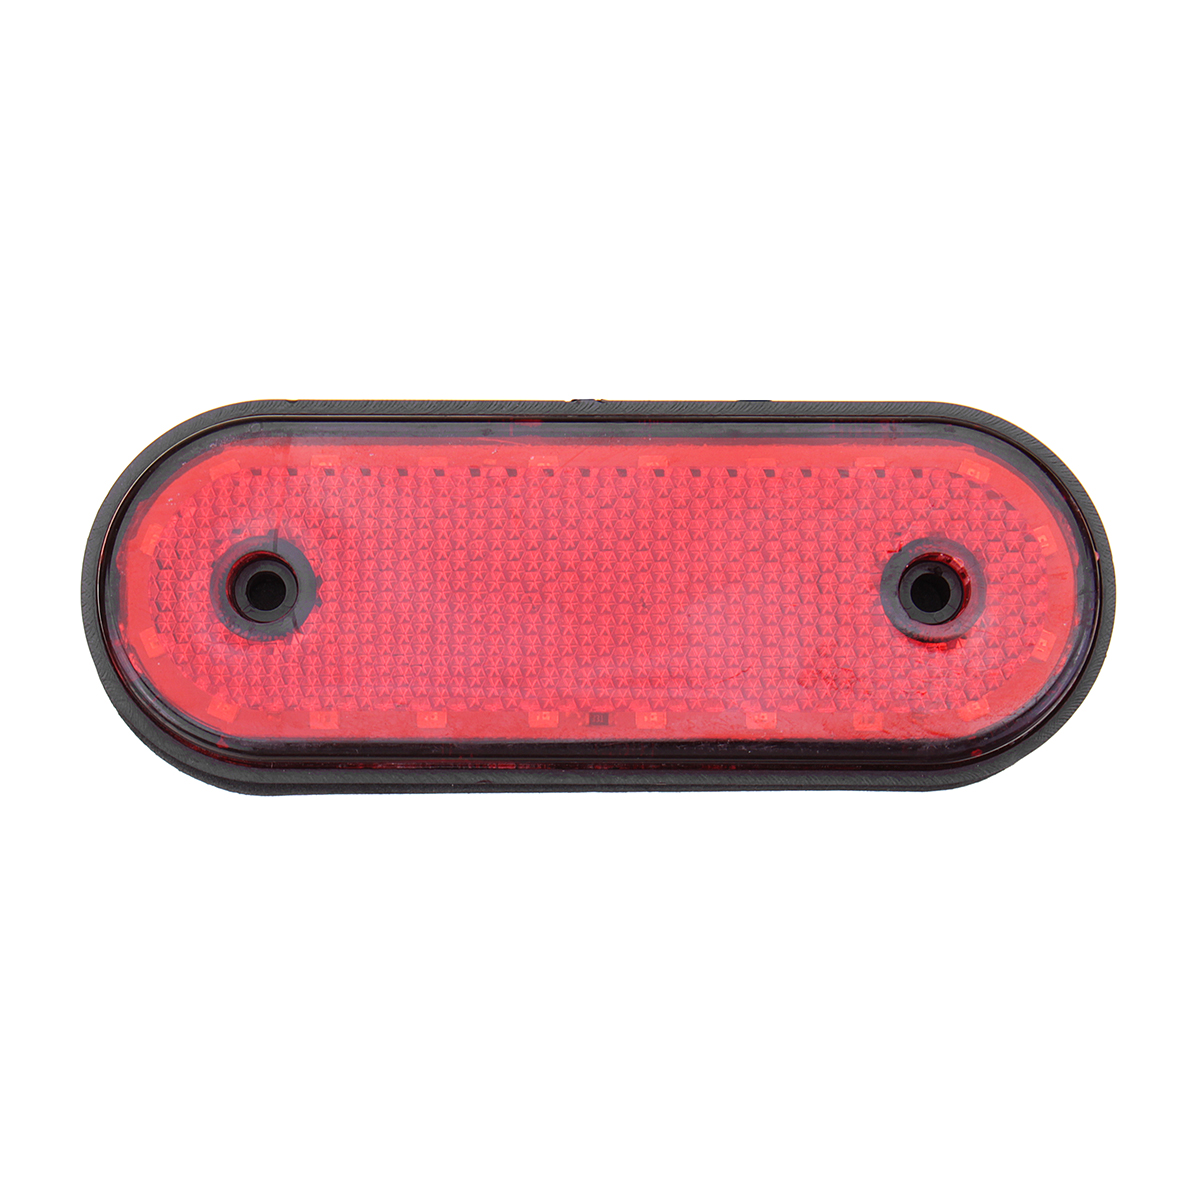 Single-Red-24v-20led-with-rubber-edge-12cm-Shock-absorbing-sponge-pad-Reflective-mask-Ip67-side-Corn-1631413-4